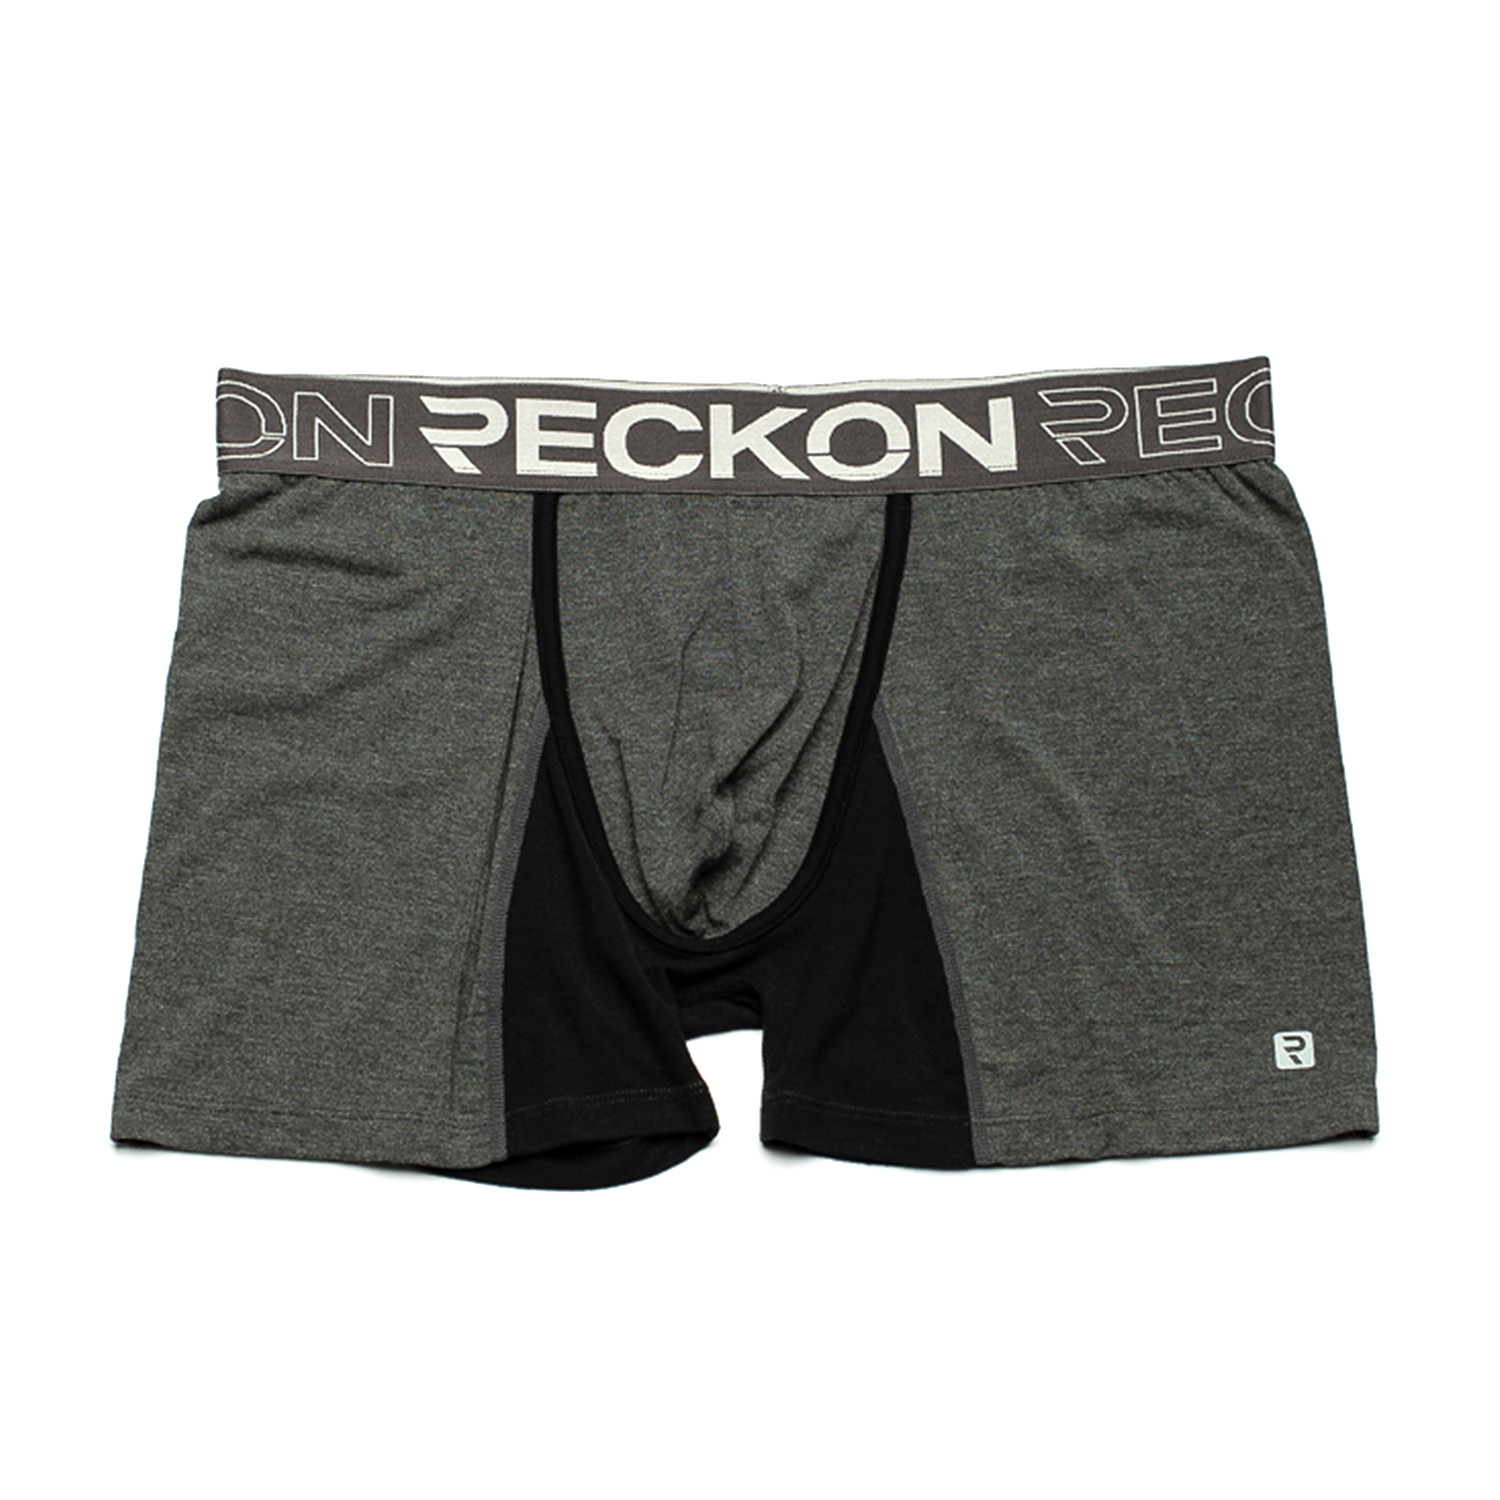 Boxer Briefs // Heather Charcoal Gray + Black (S) - Reckon Underwear ...